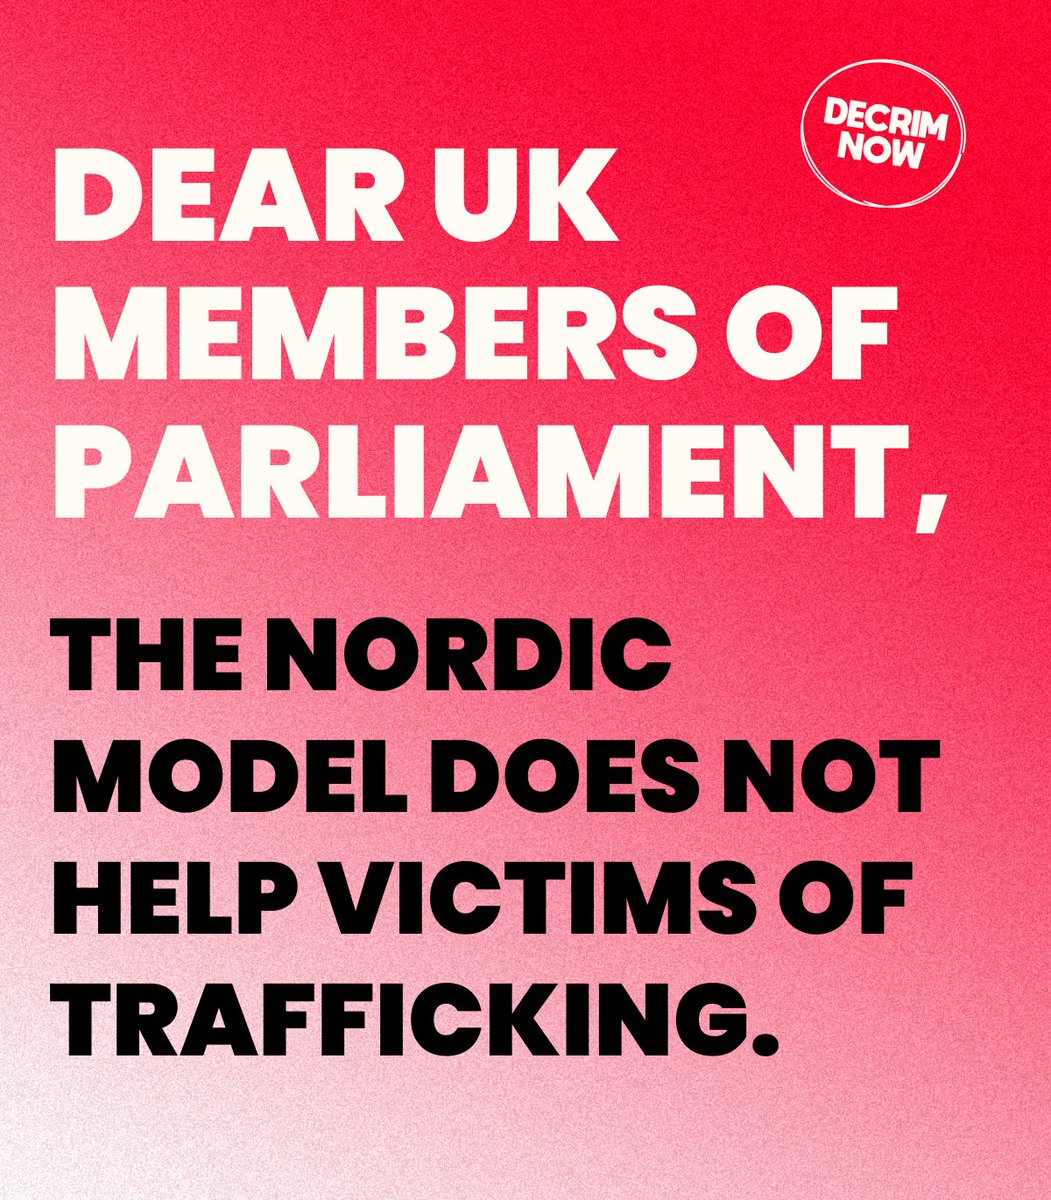  @belfemnet signed our open letter against the Nordic Model Belfast Feminist Network.Read the letter here  https://decrimnow.org.uk/open-letter-on-the-nordic-model/  #notonordicmodel